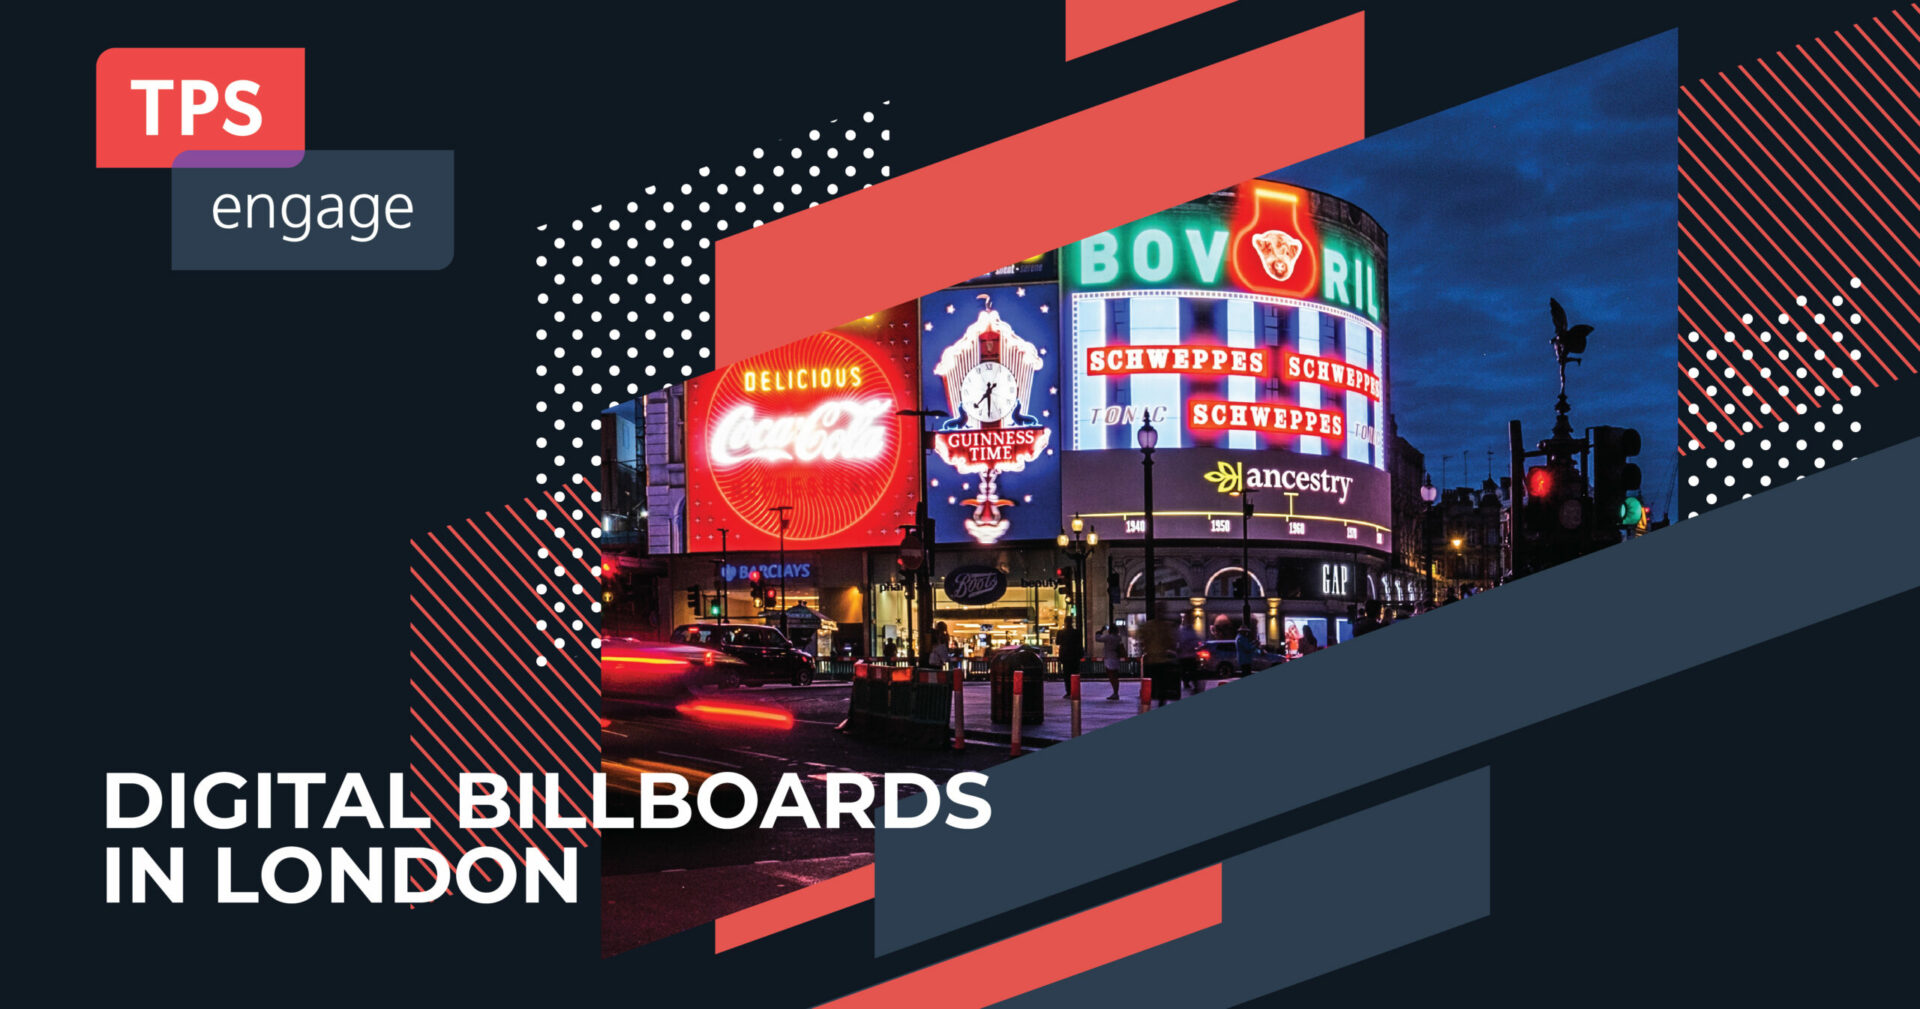 Digital billboards in London cover